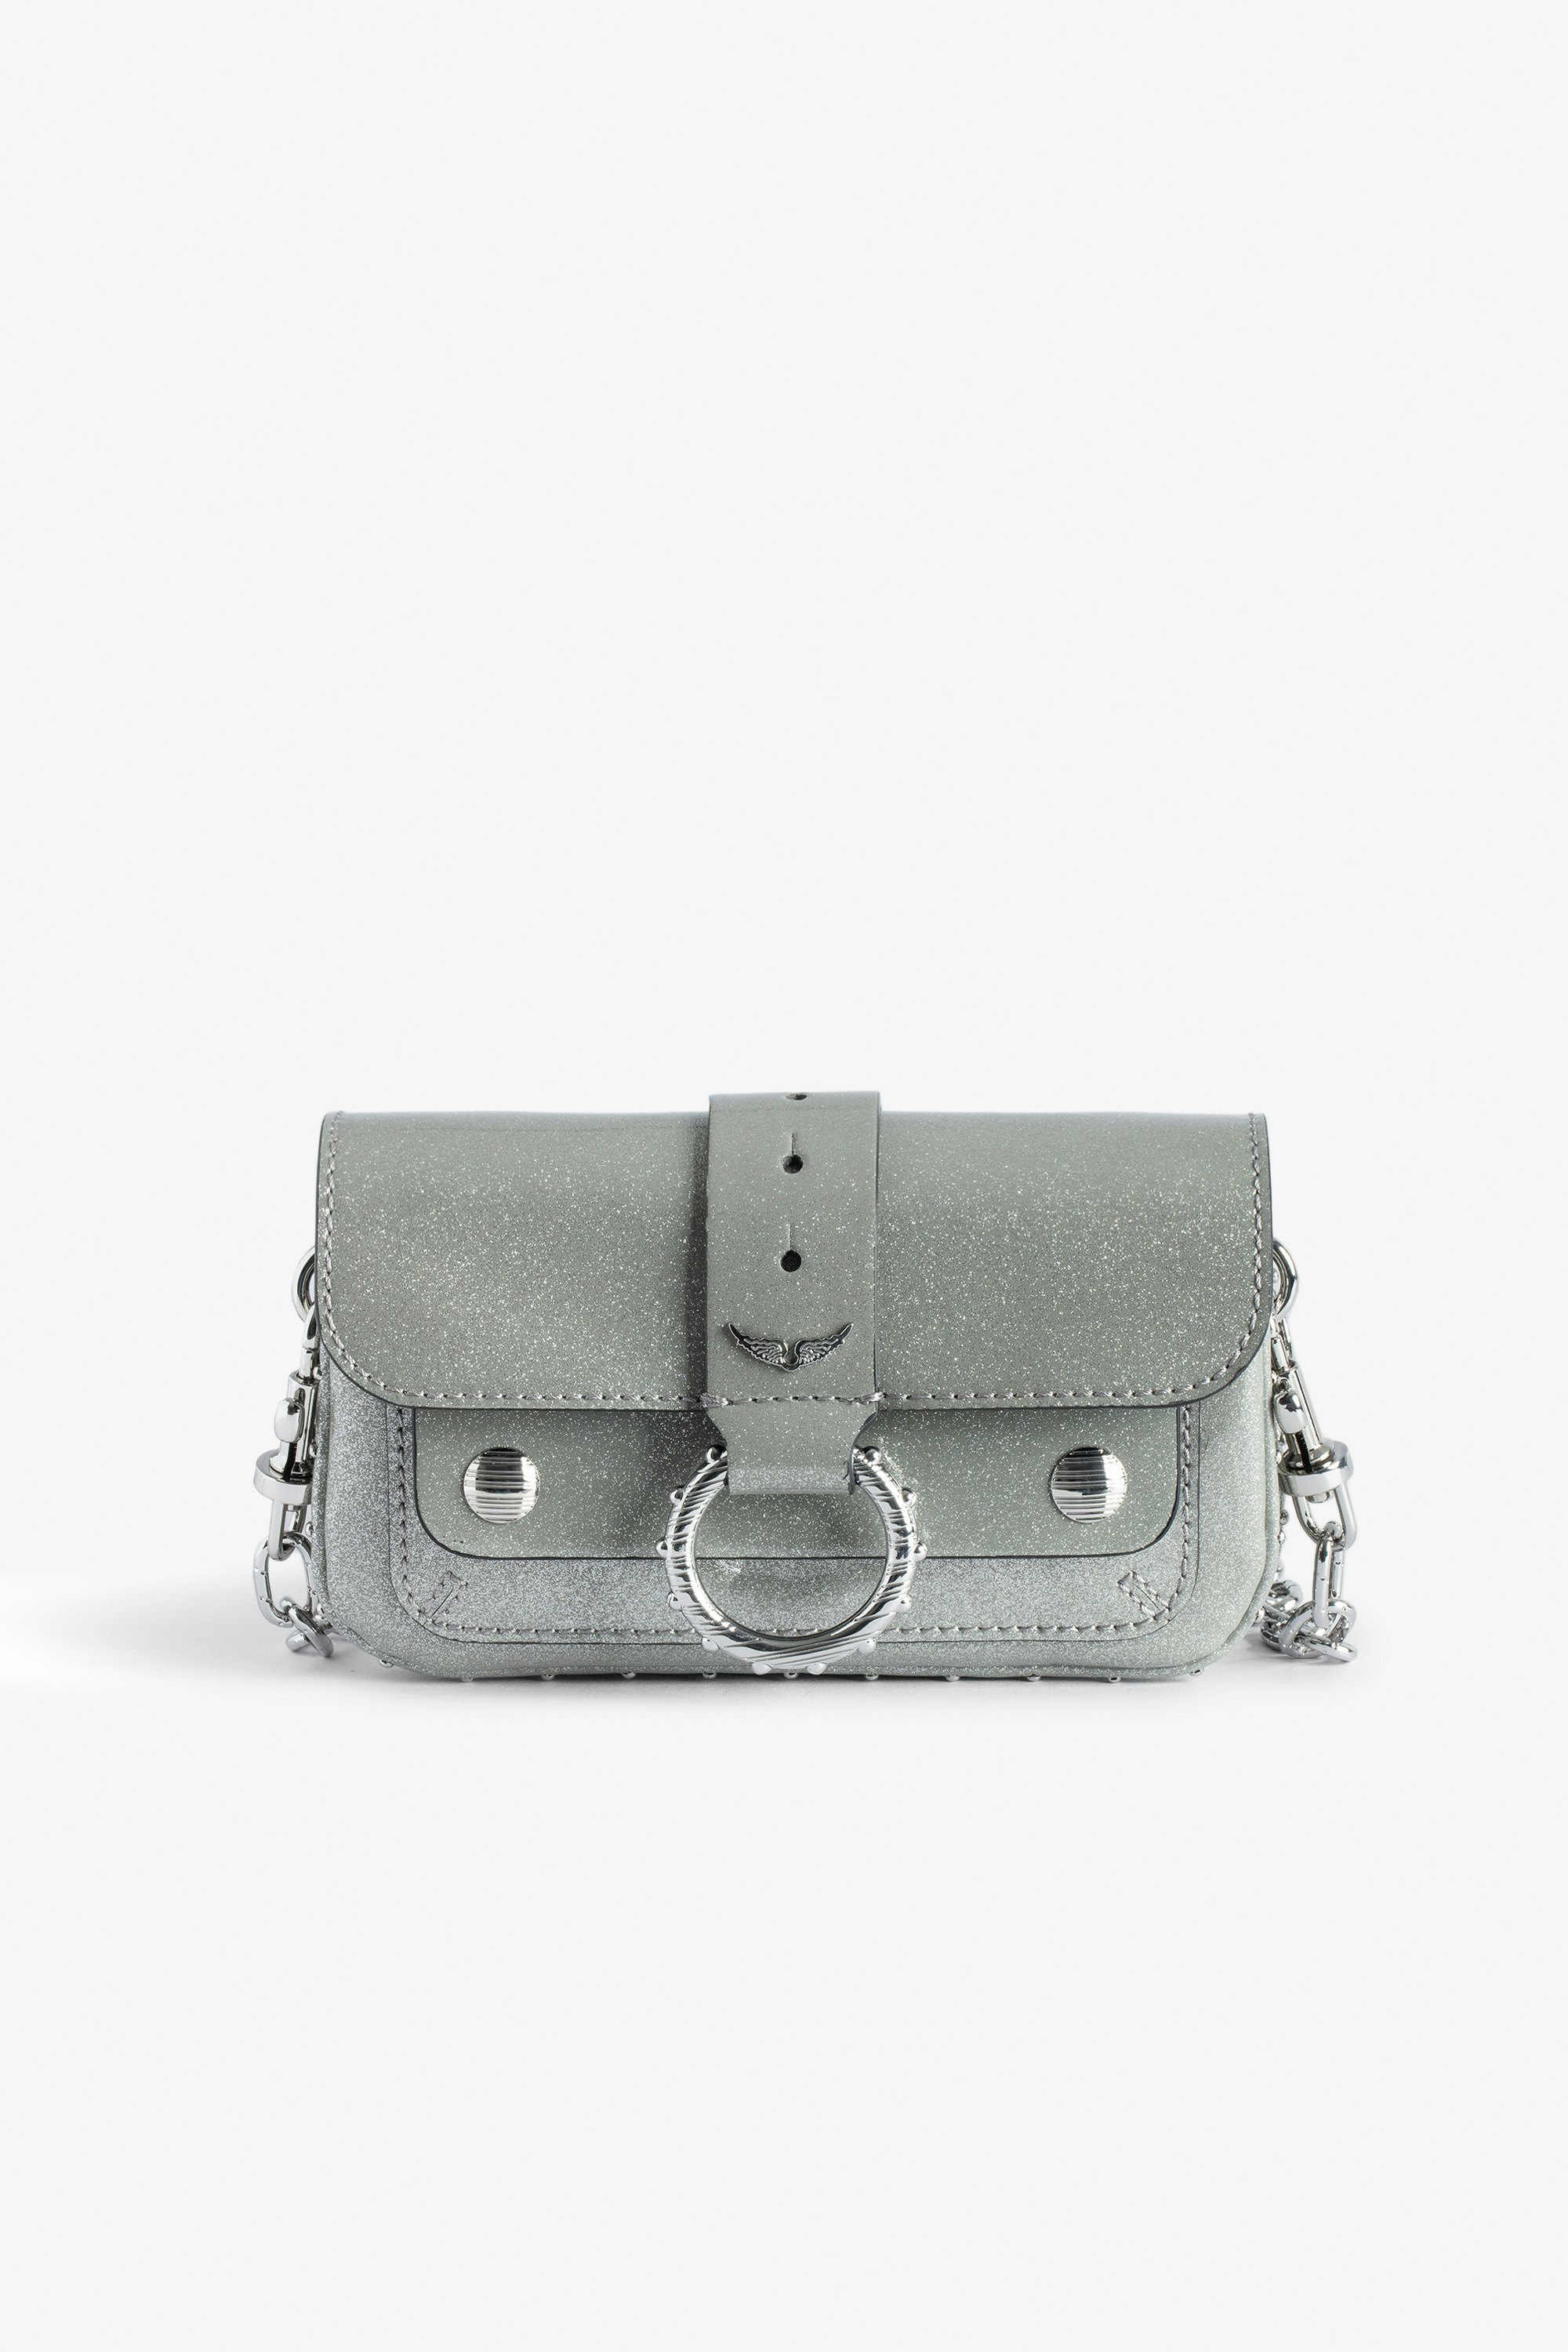 Kate Metallic Wallet Bag - Women’s silver metallic patent leather mini bag with metal chain.